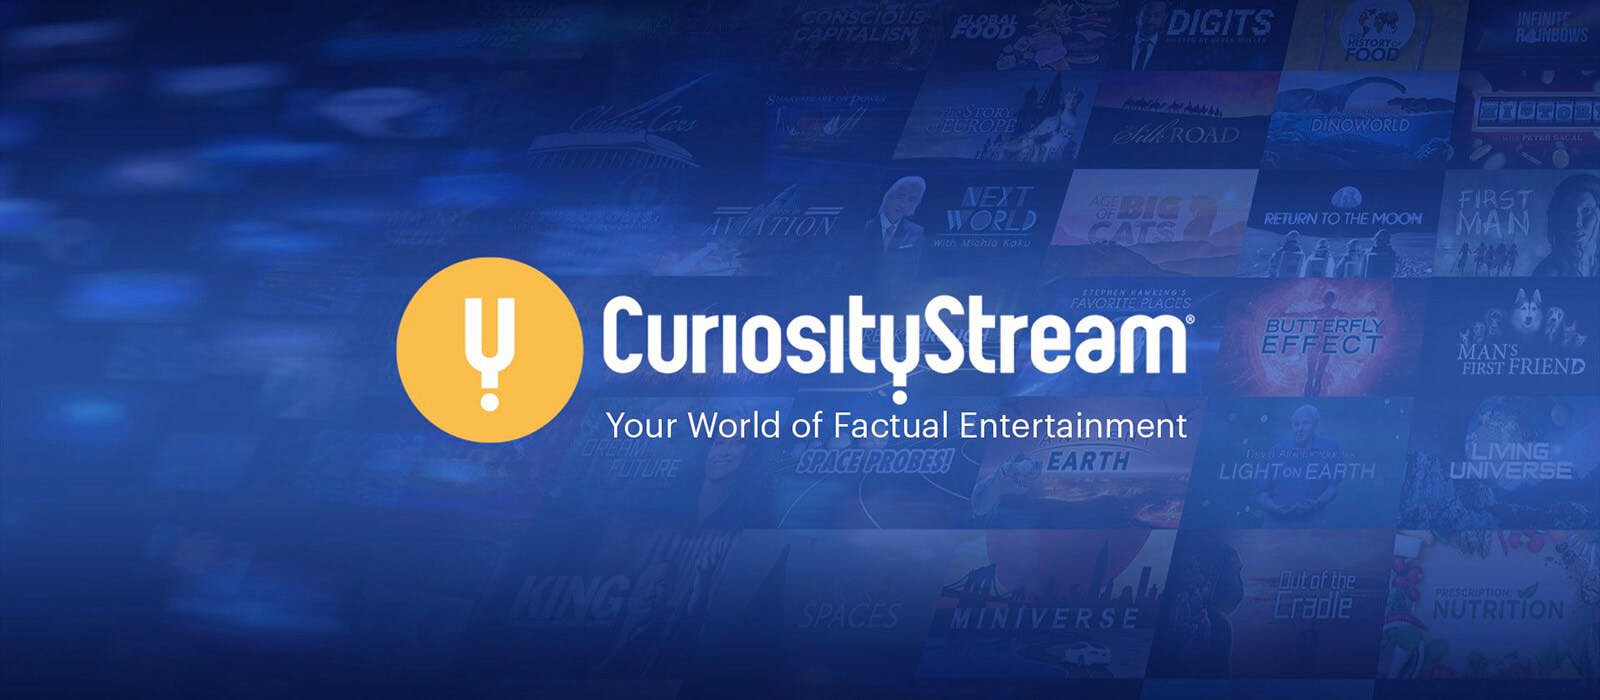 Curiosity Stream logo